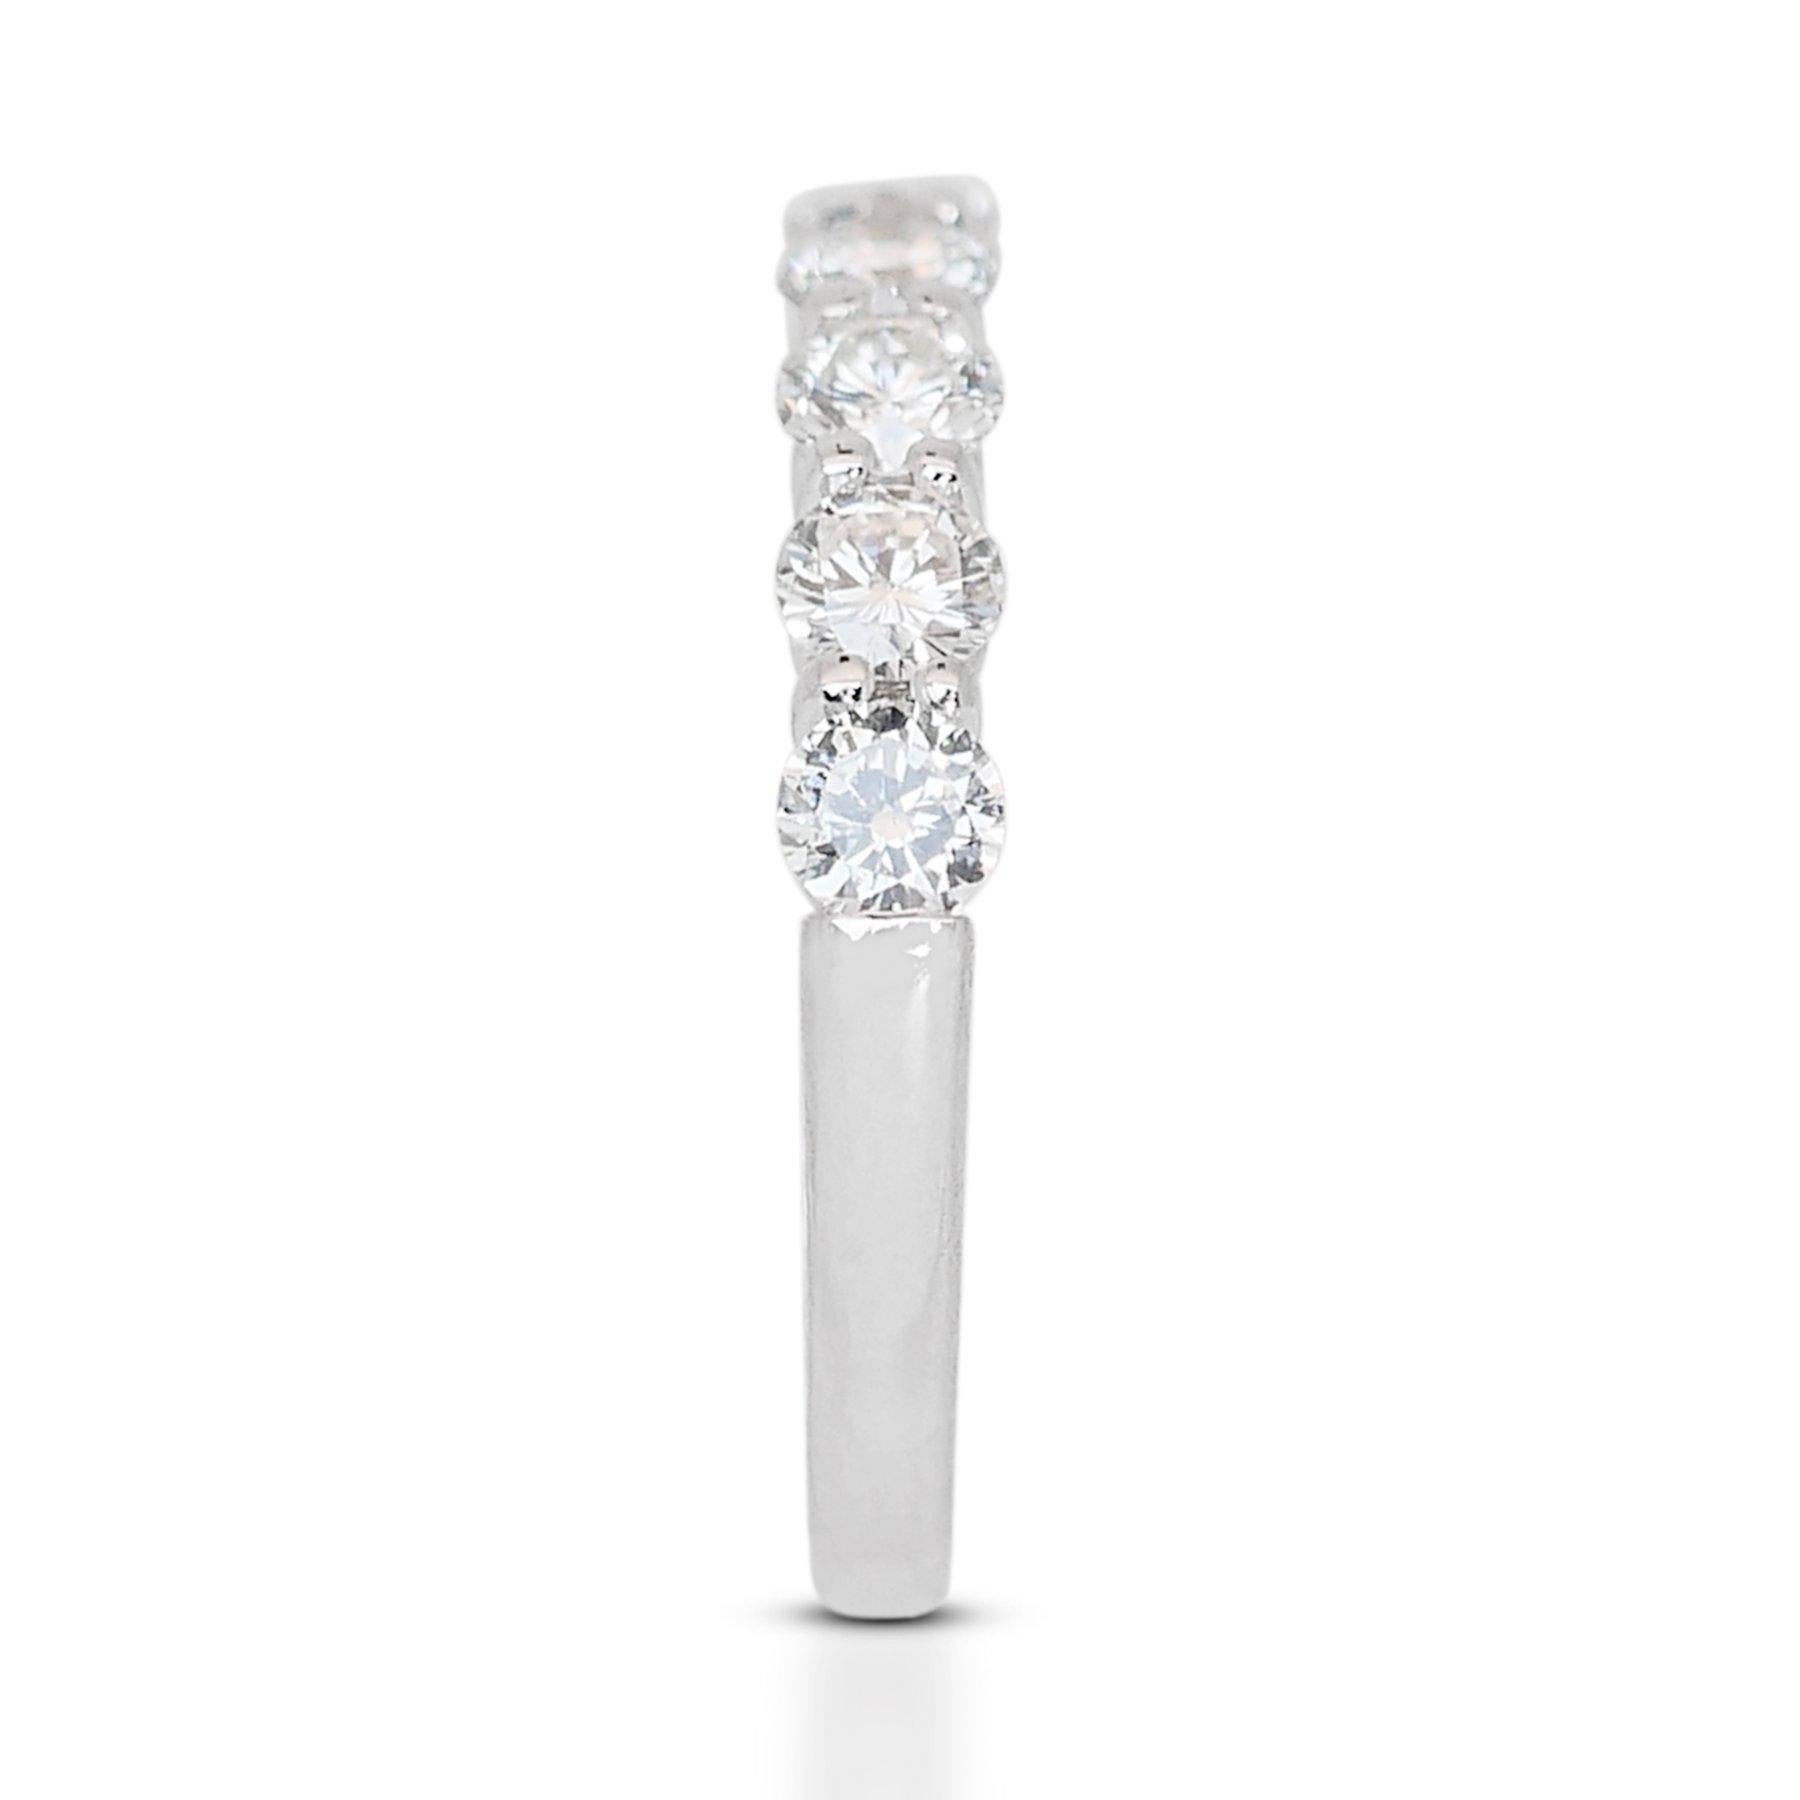 Round Cut Stunning 2.10ct Diamonds 7-Stone Ring in 18k White Gold - GIA Certified